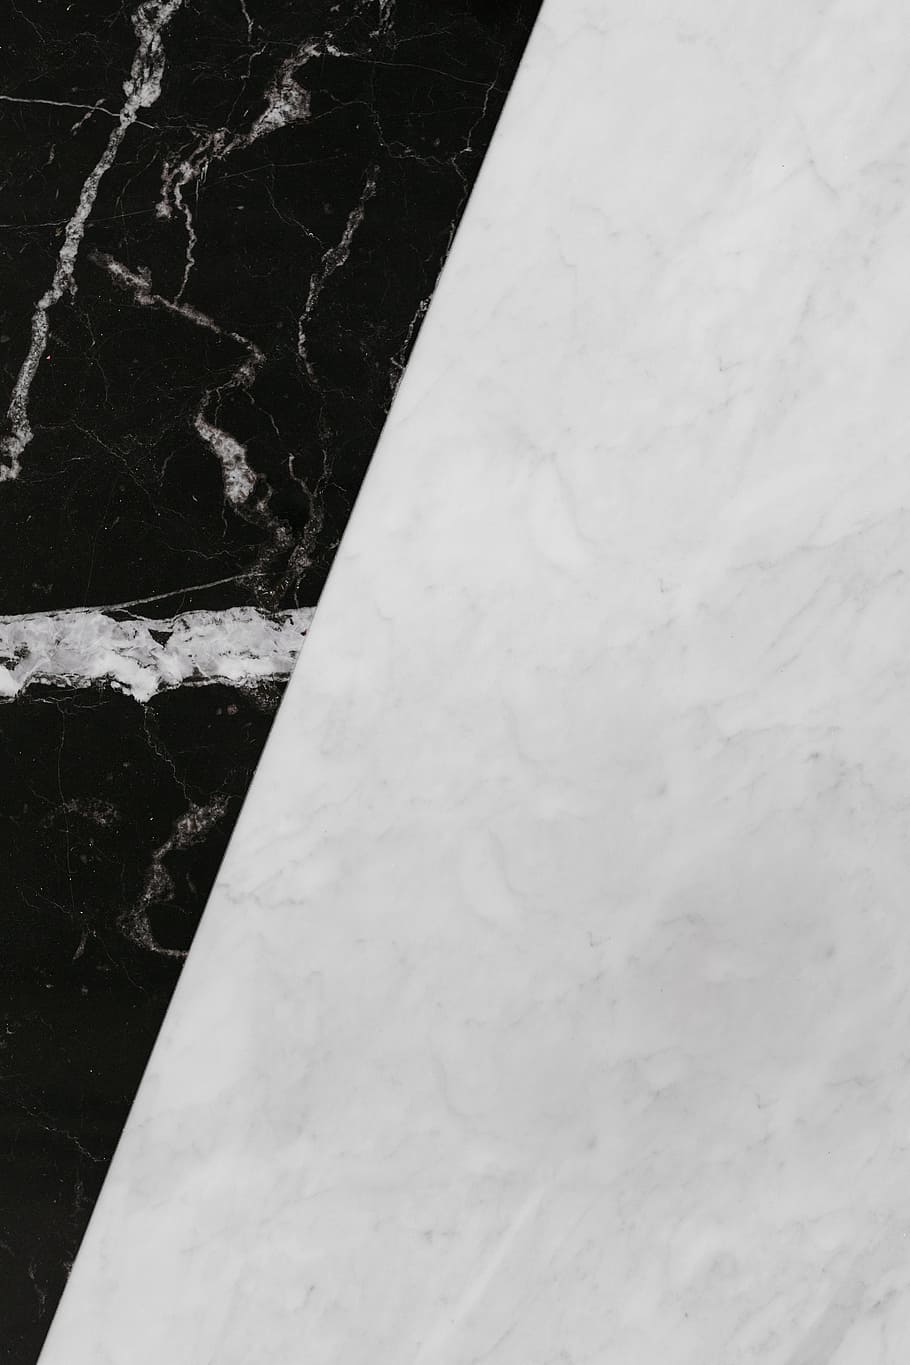 mármol, blanco, negro, textura de fondo, piedra, textura, fondo, blanco y negro, abstracto, mínimo